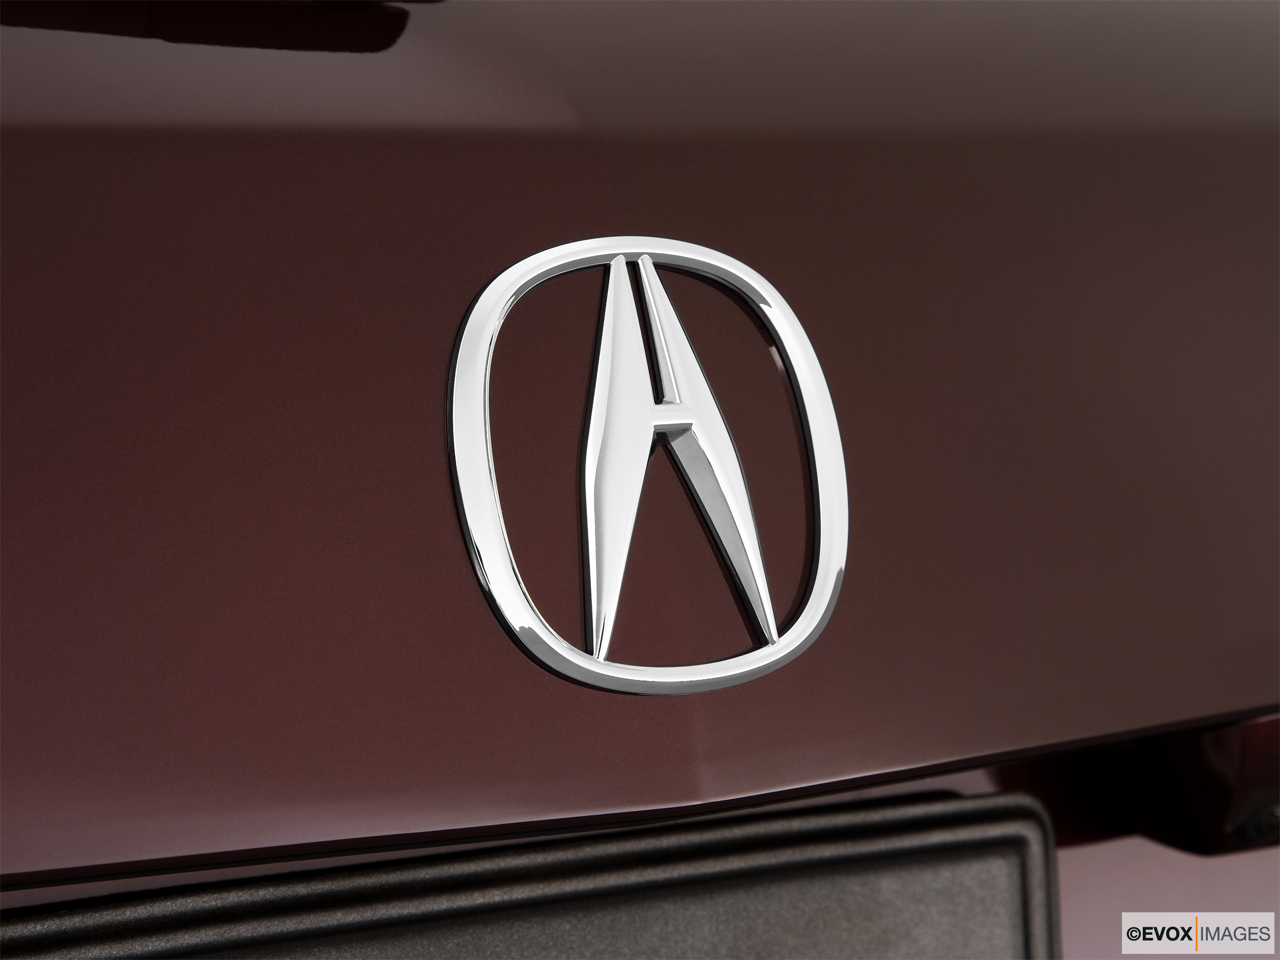 2010 Acura MDX MDX Rear manufacture badge/emblem 